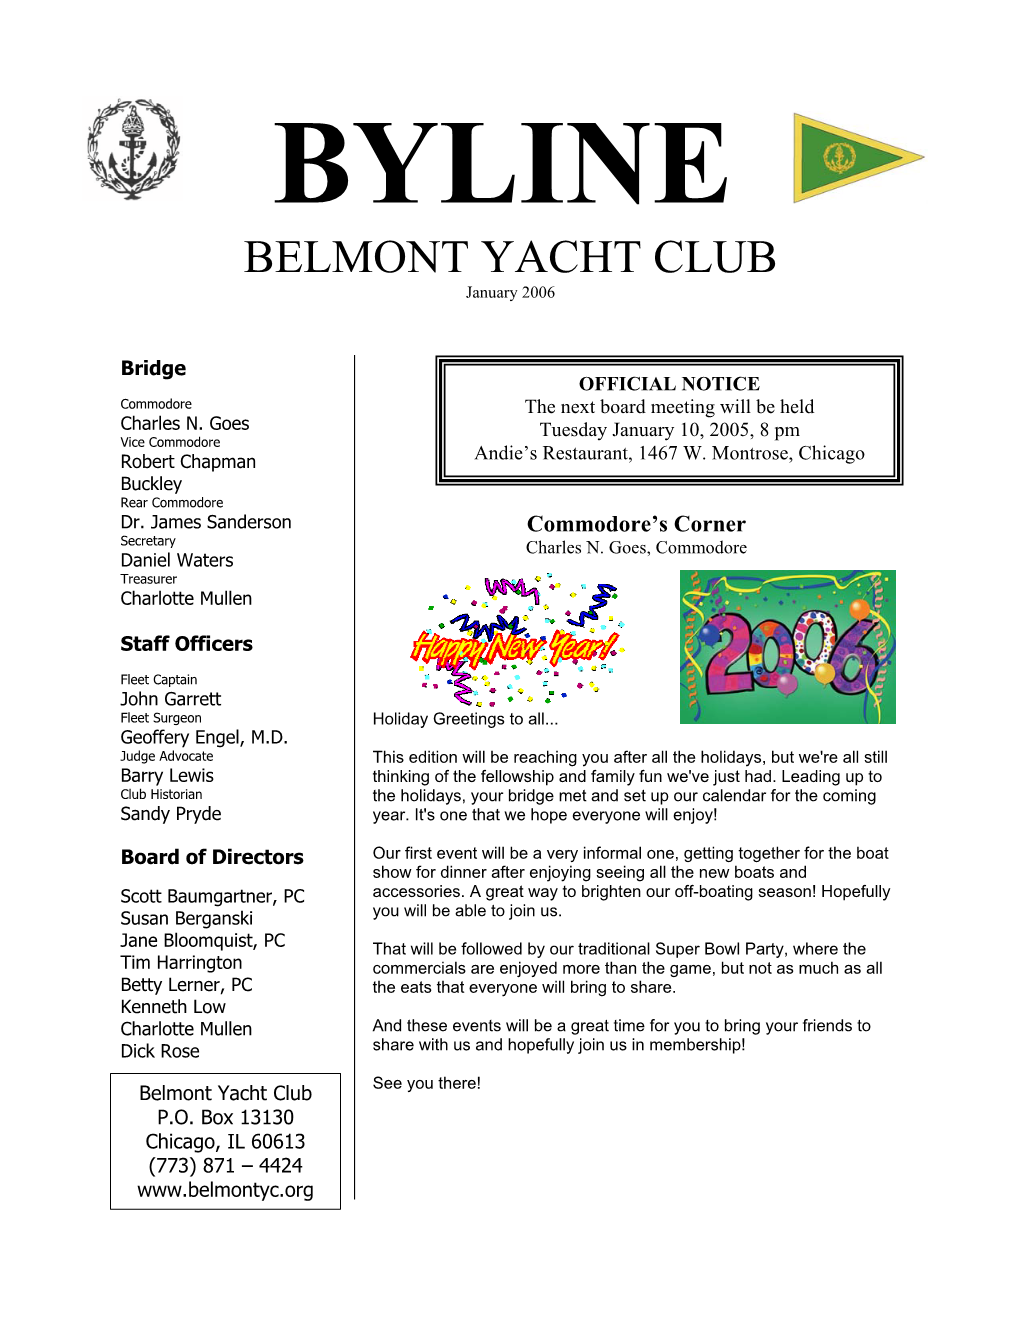 BYLINE BELMONT YACHT CLUB January 2006